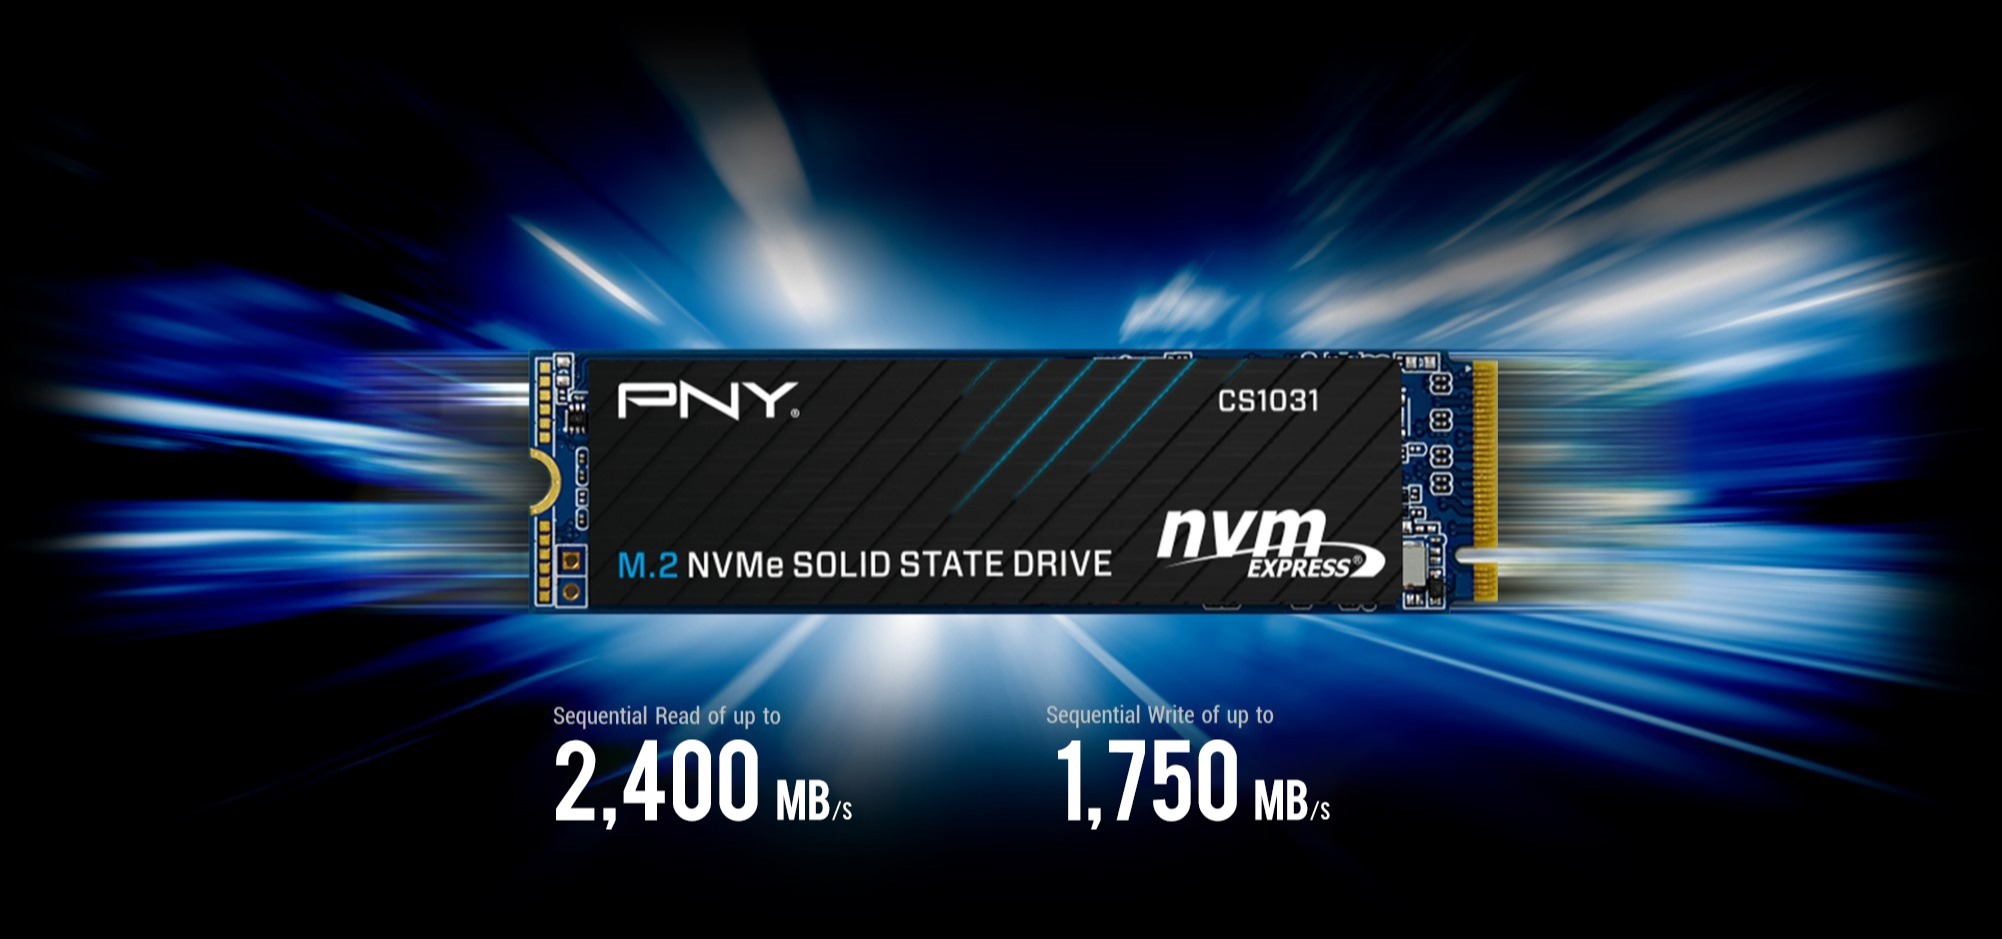 NVMe PNY CS1031 500GB PCIe 2280 Gen3x4